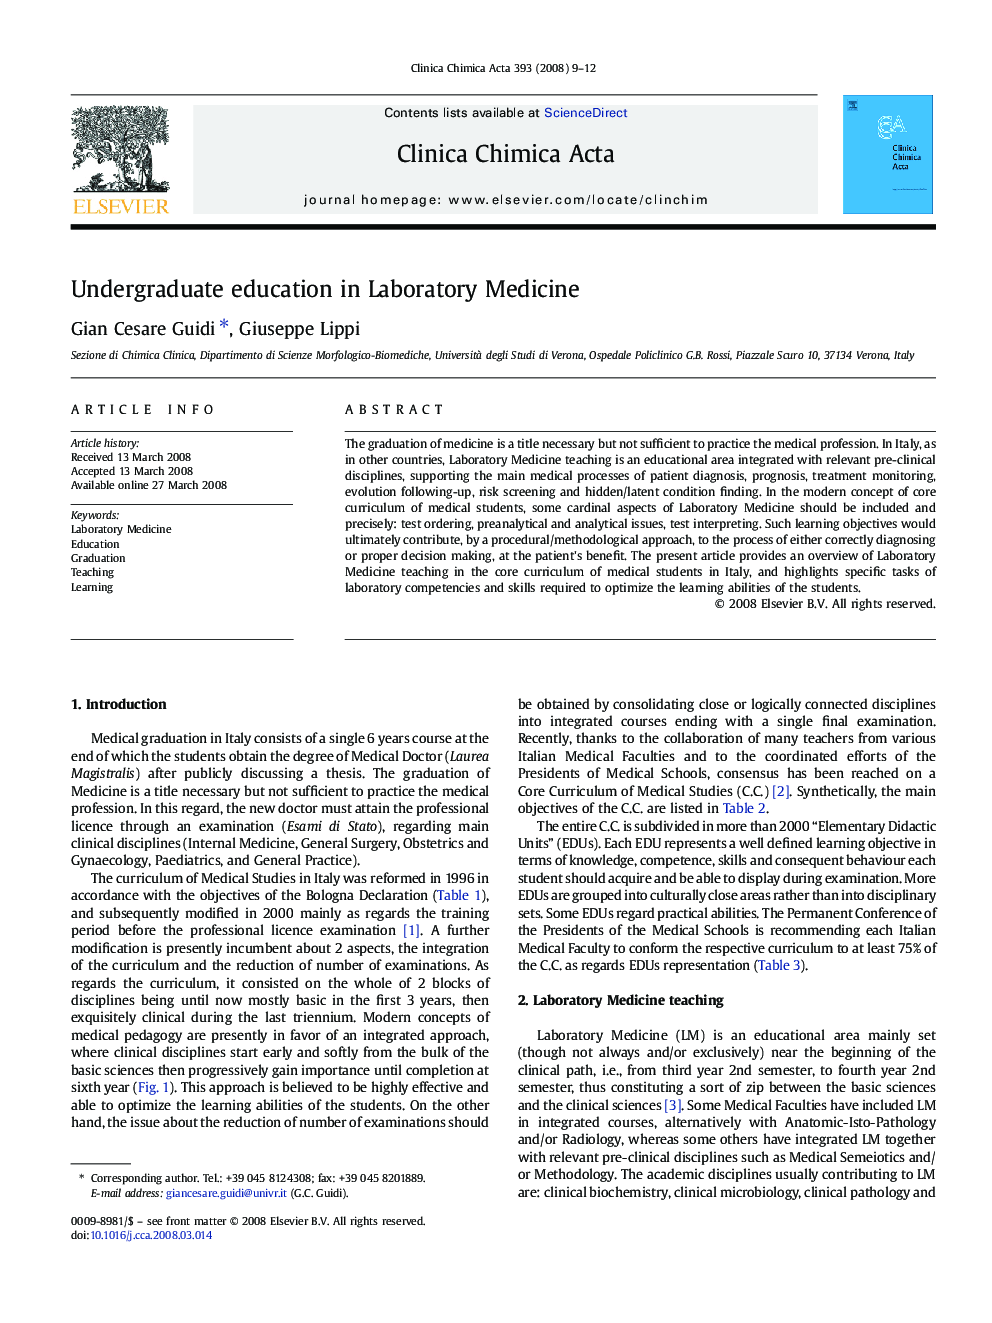 Undergraduate education in Laboratory Medicine